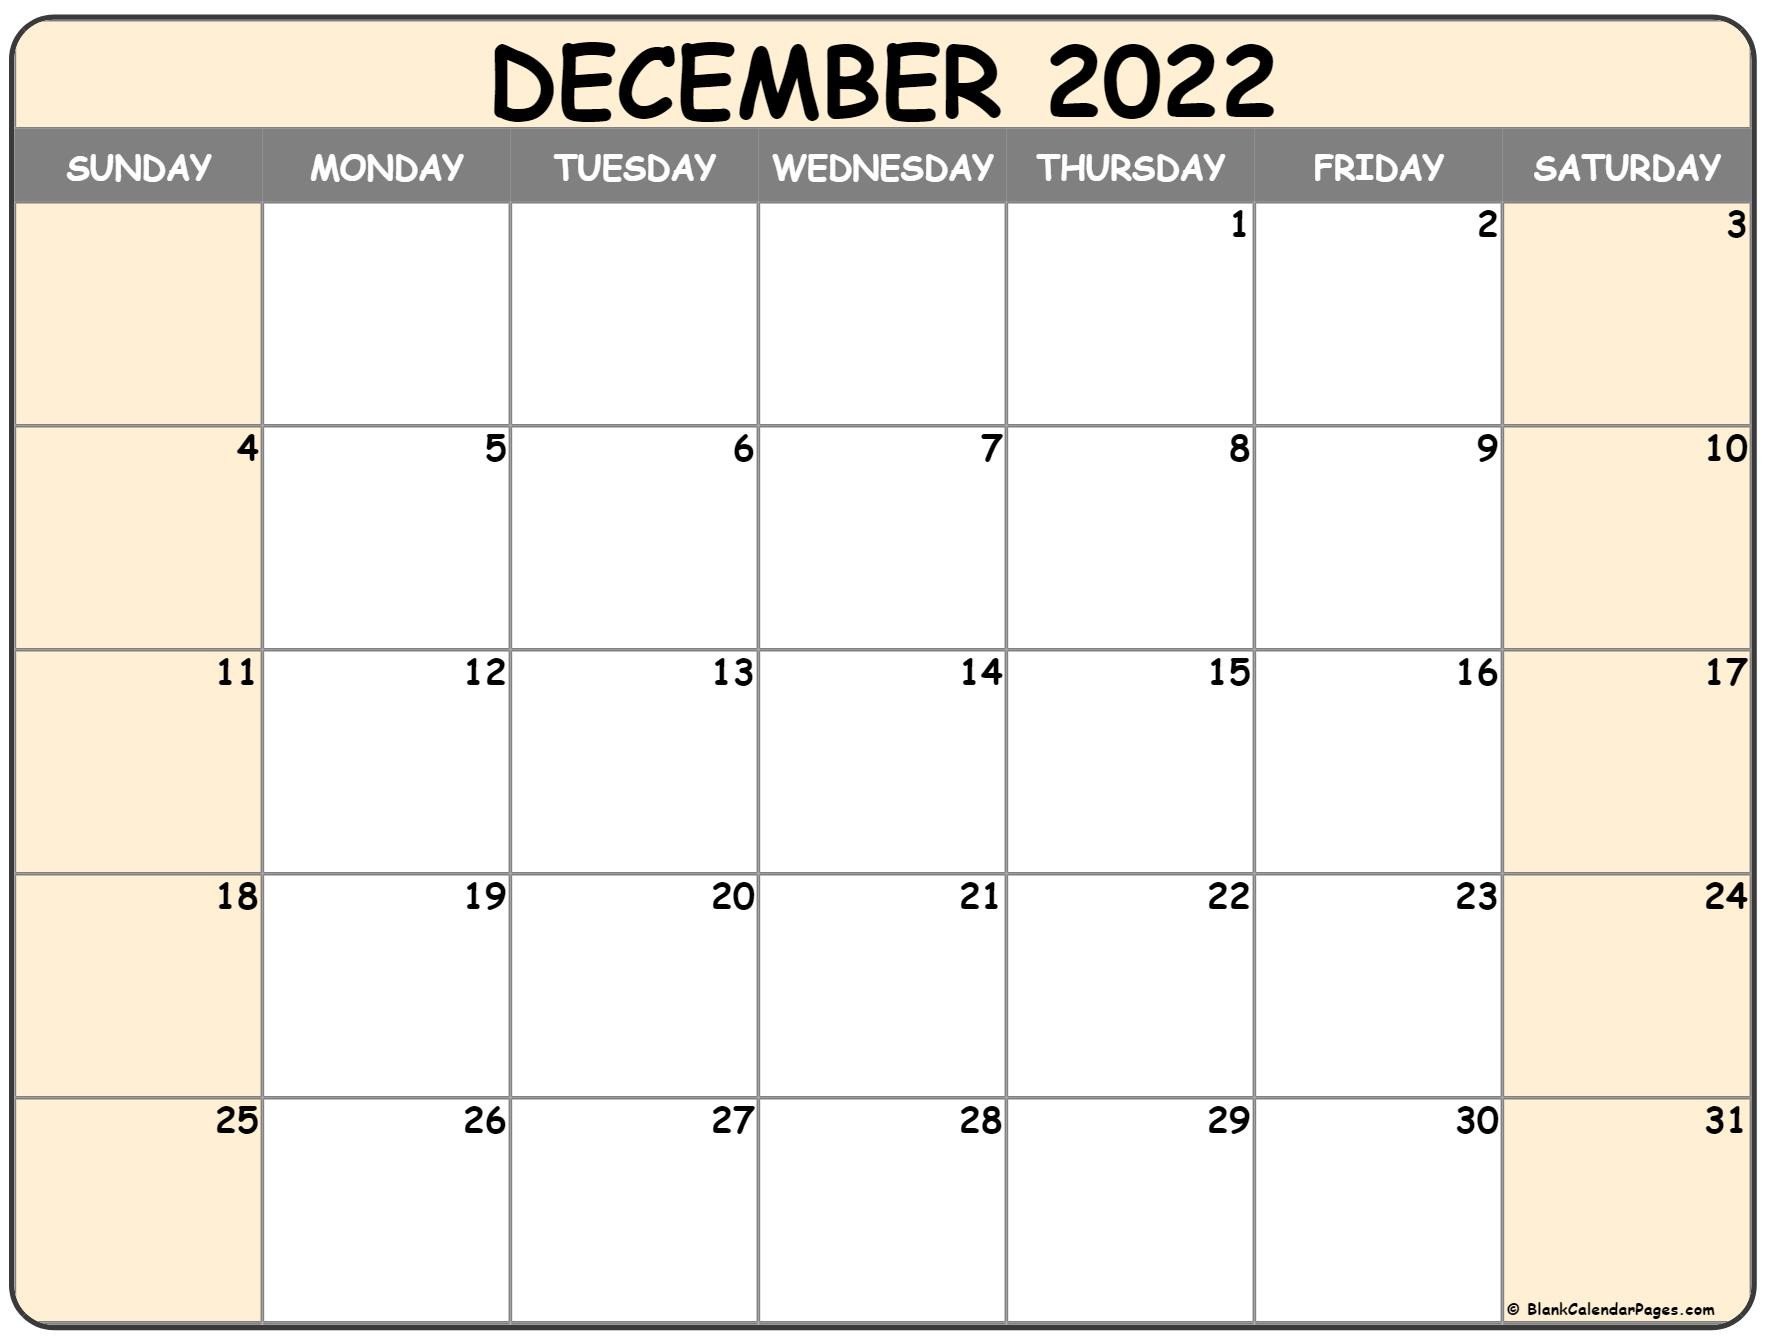 December 2022 Calendar | Free Printable Calendar Templates  Printable Calendar January 2022 To December 2022